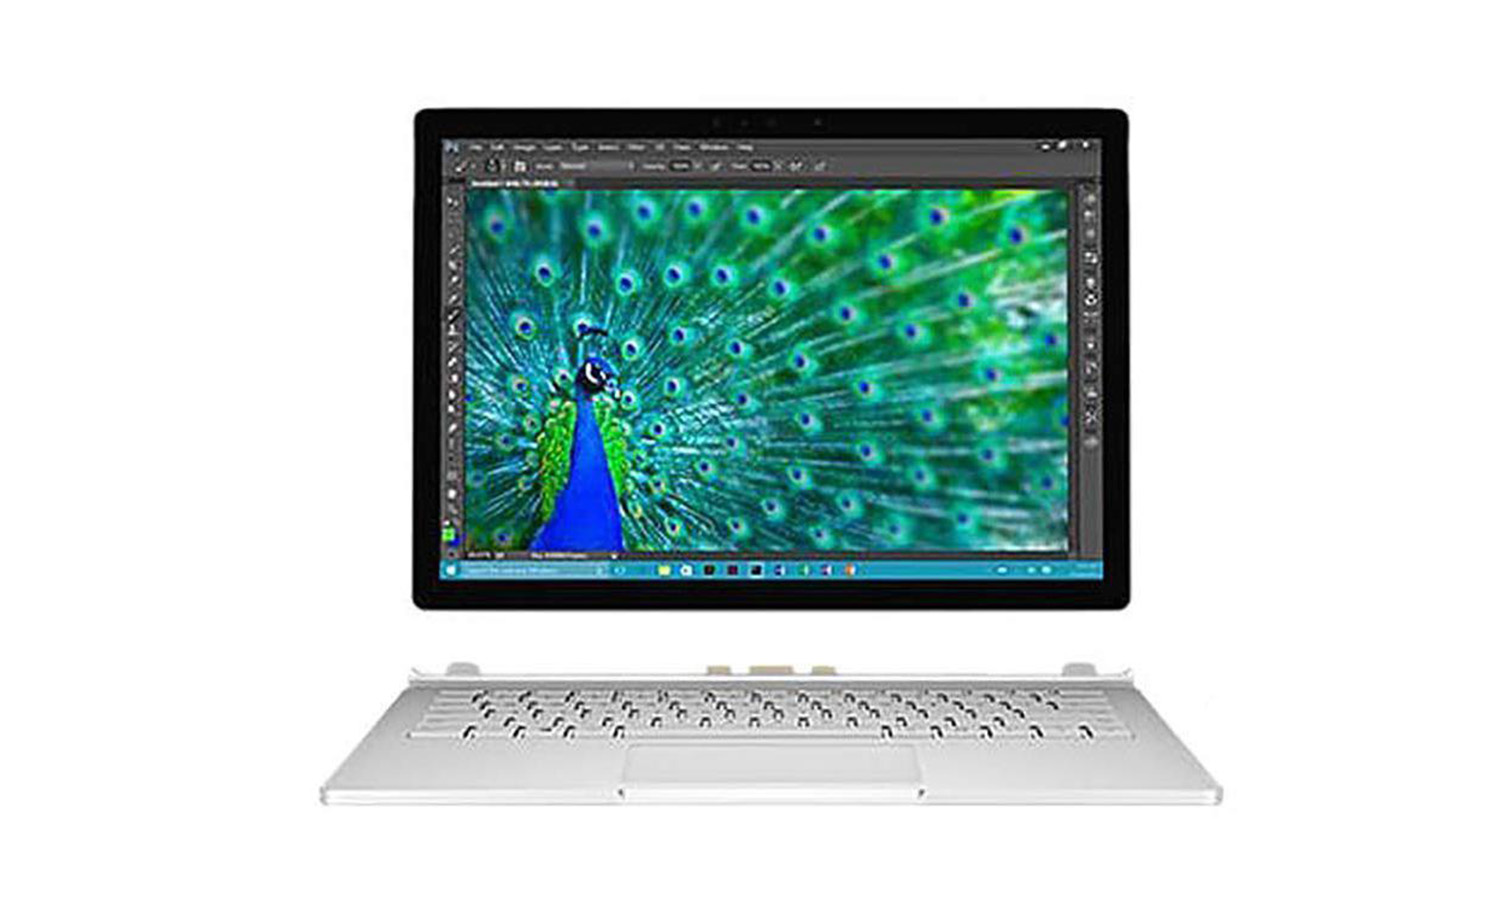 Microsoft Surface Book Intel Core i7 6th Gen 16GB RAM 512GB SSD Touchscreen Windows 10 Pro Nvidia GeForce GTX 965M